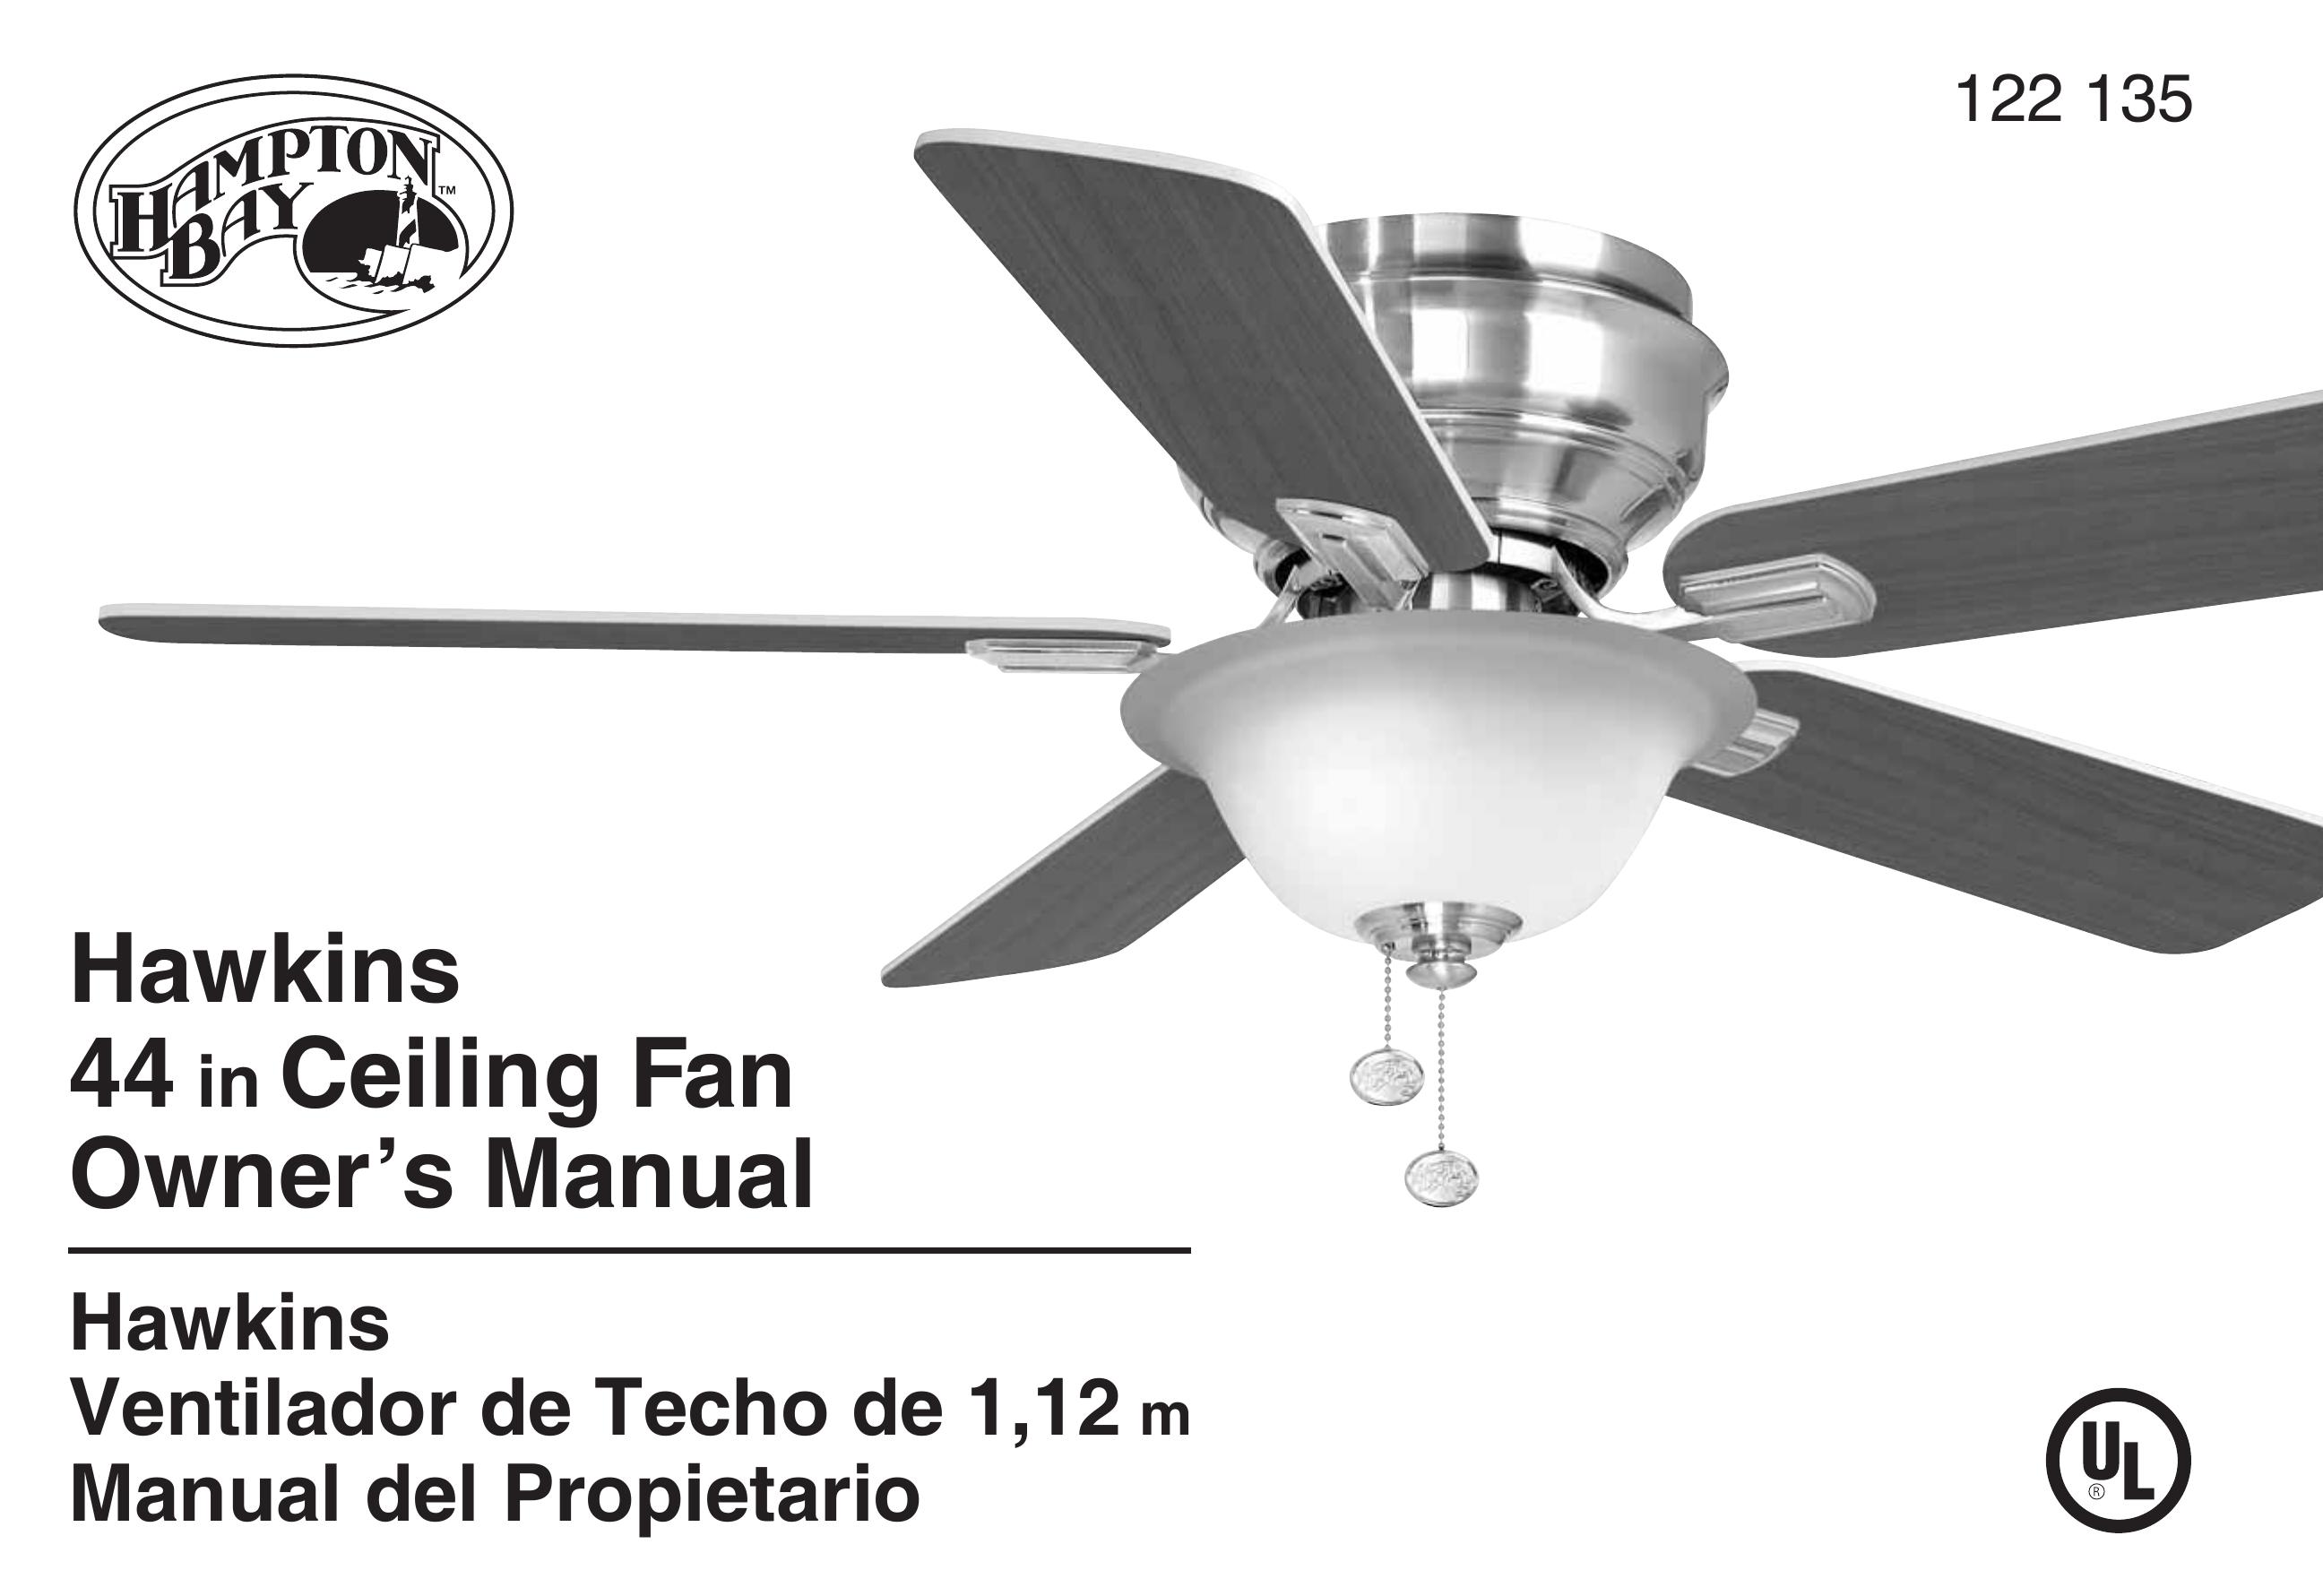 Hampton Bay 122 135 Outdoor Ceiling Fan User Manual